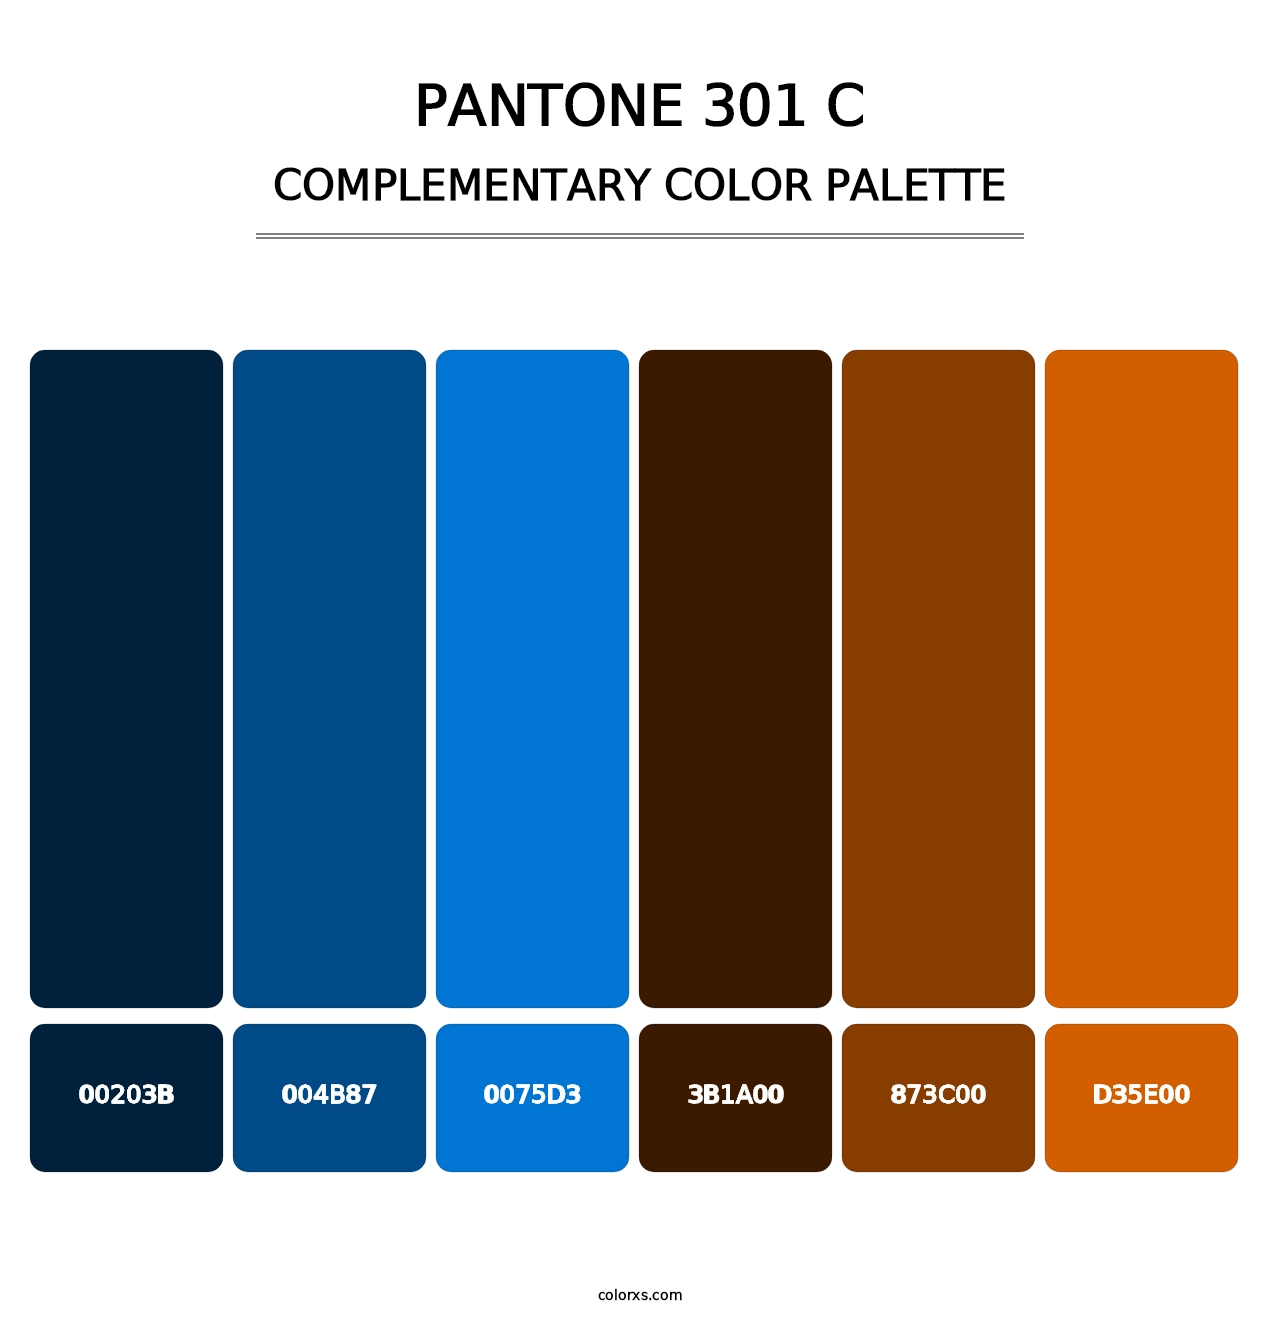 PANTONE 301 C - Complementary Color Palette